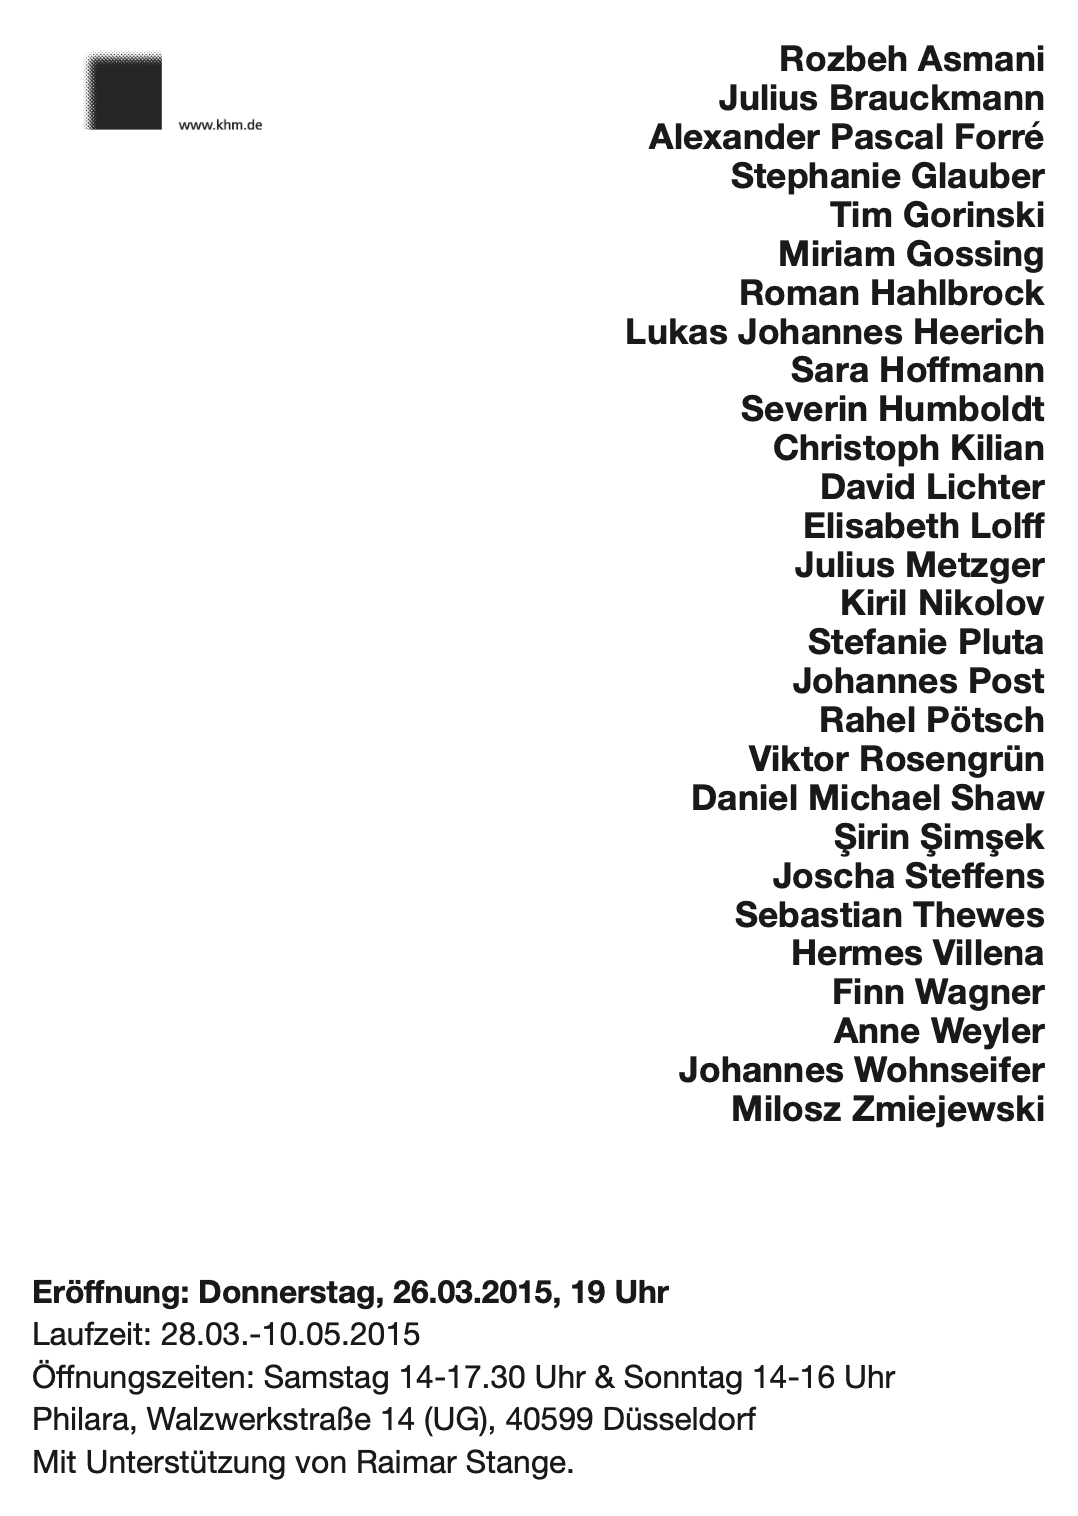 2015 Exhibition Sammlung Philara Duesseldorf Are You Series